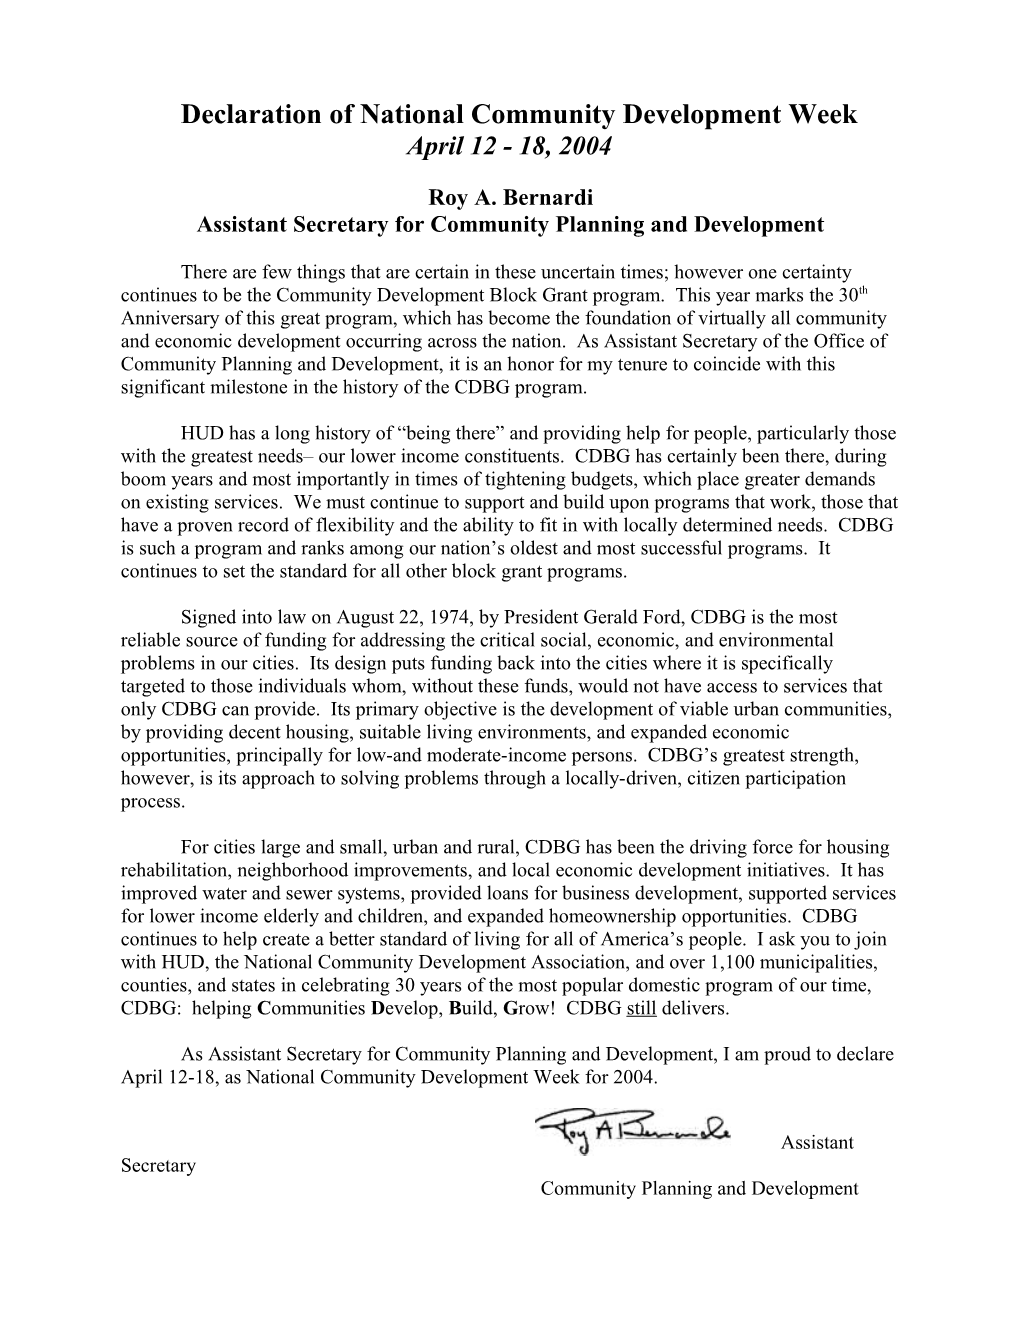 Declaration of National Community Development Week April 12- 18, 2004